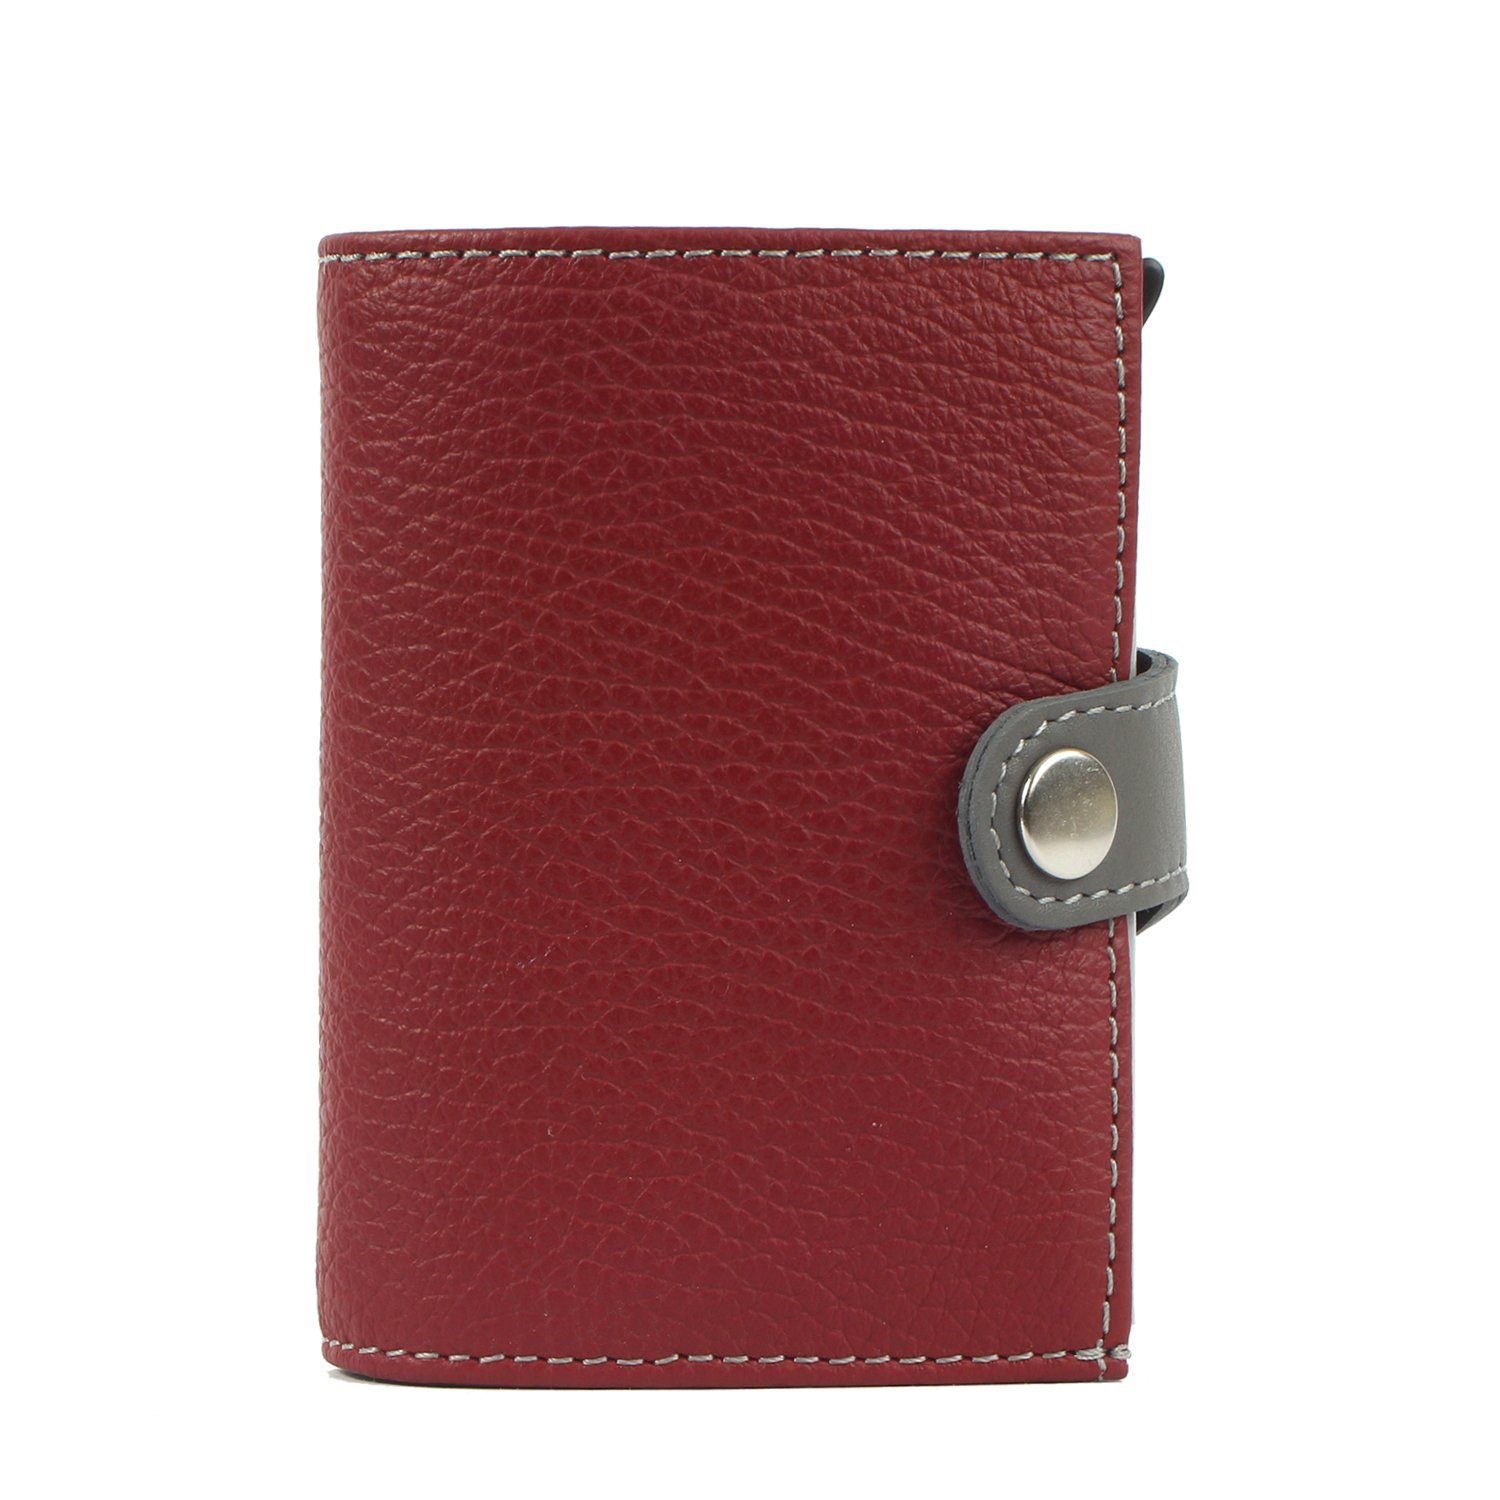 Margelisch Mini Geldbörse noonyu double leather, RFID Kreditkartenbörse aus Upcycling Leder karminrot | Mini-Geldbörsen